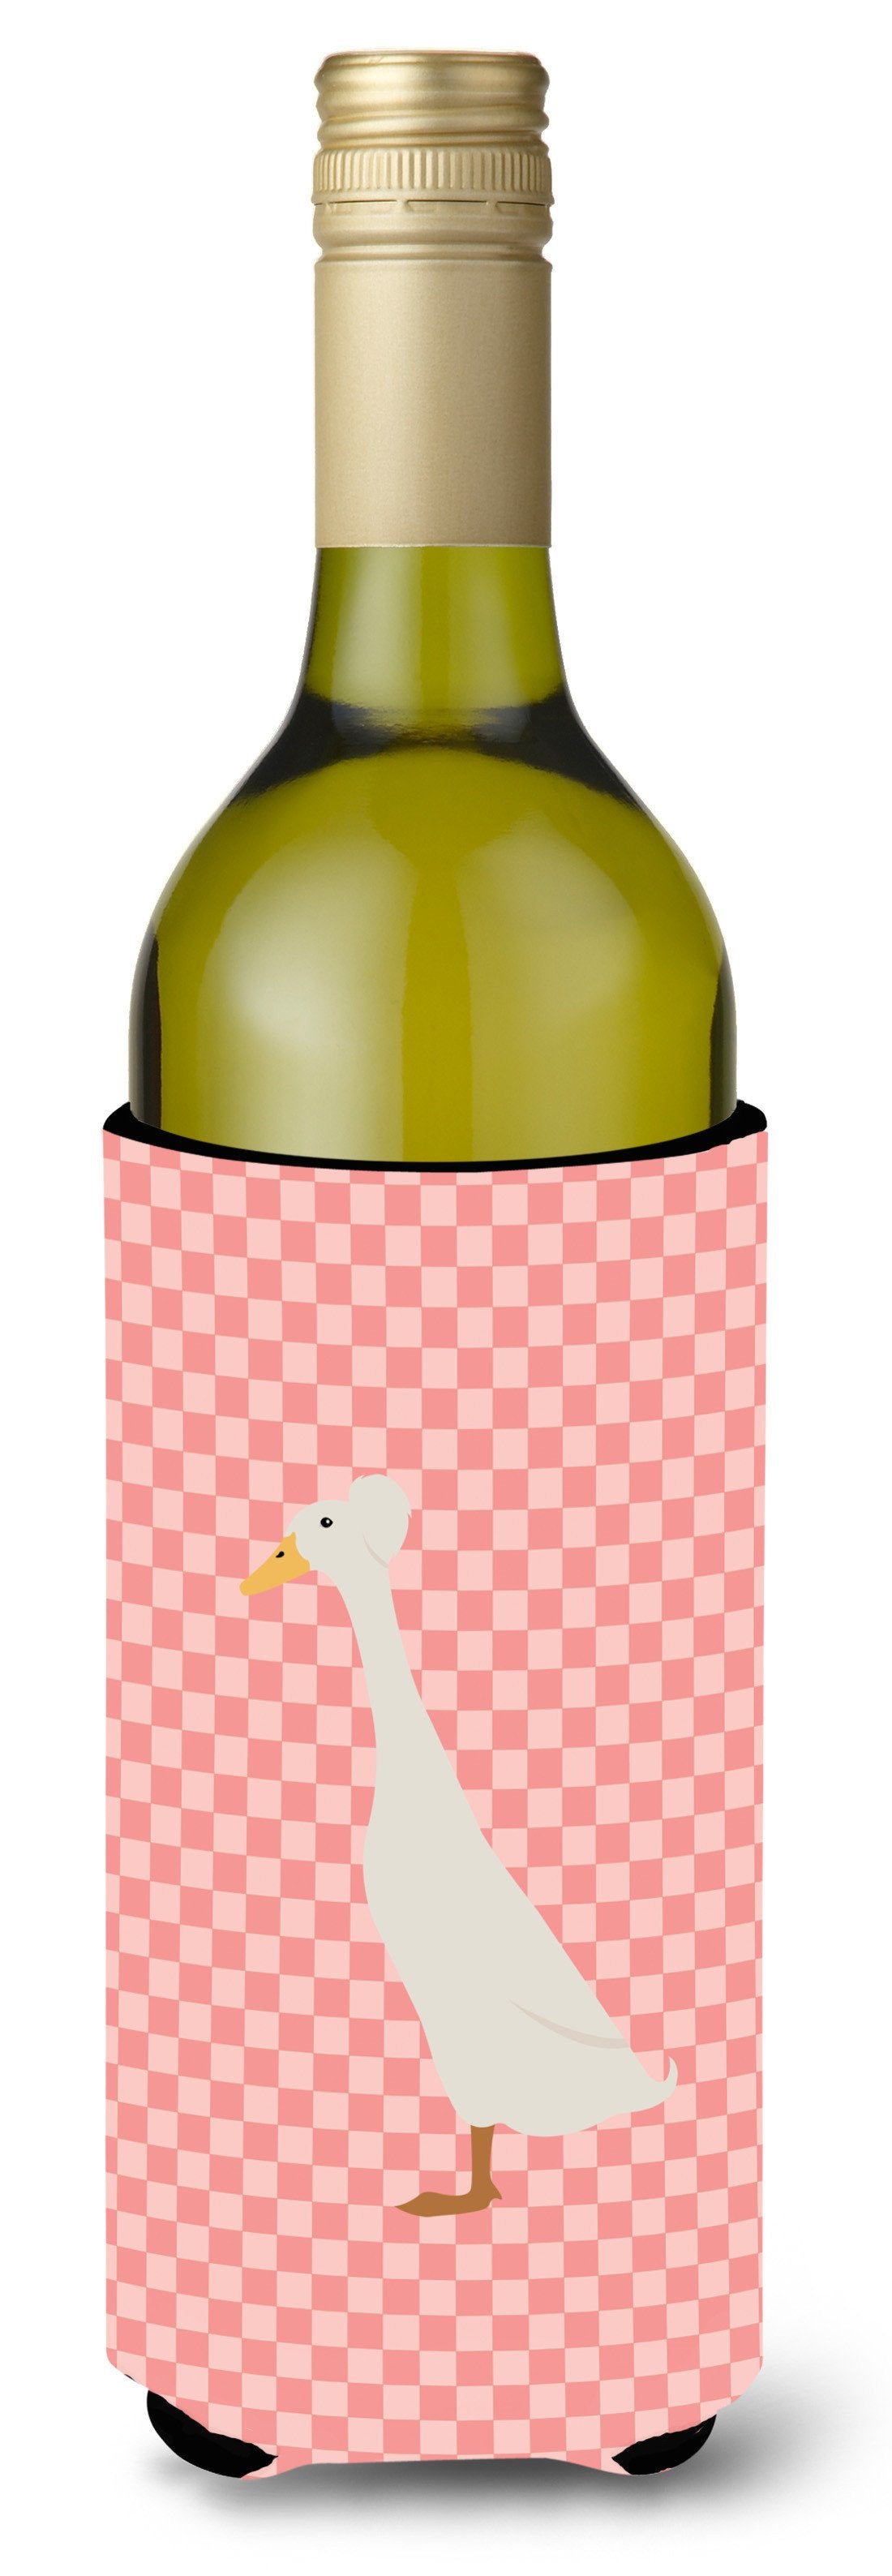 Bali Duck Pink Check Wine Bottle Beverge Insulator Hugger BB7859LITERK by Caroline's Treasures